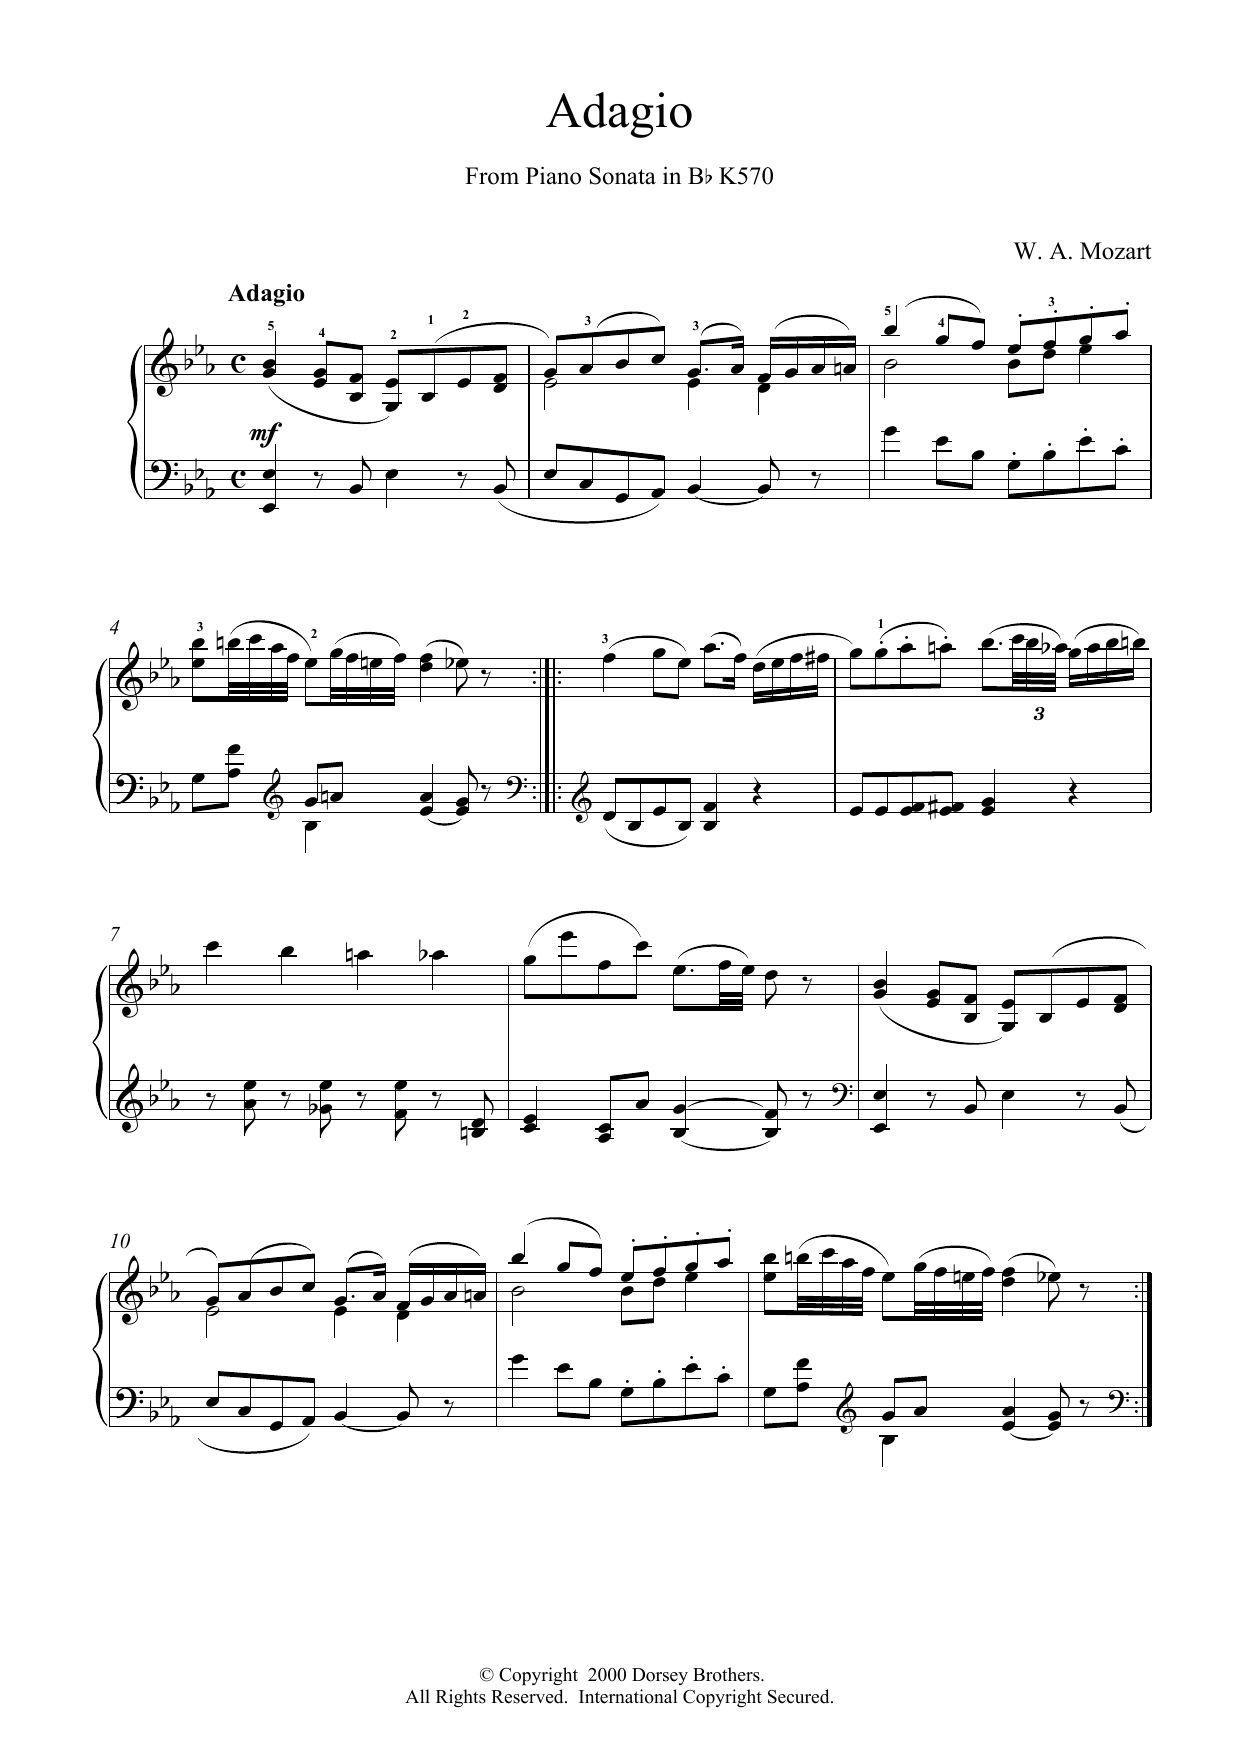 Download Wolfgang Amadeus Mozart Adagio from Piano Sonata in Bb, K570 Sheet Music